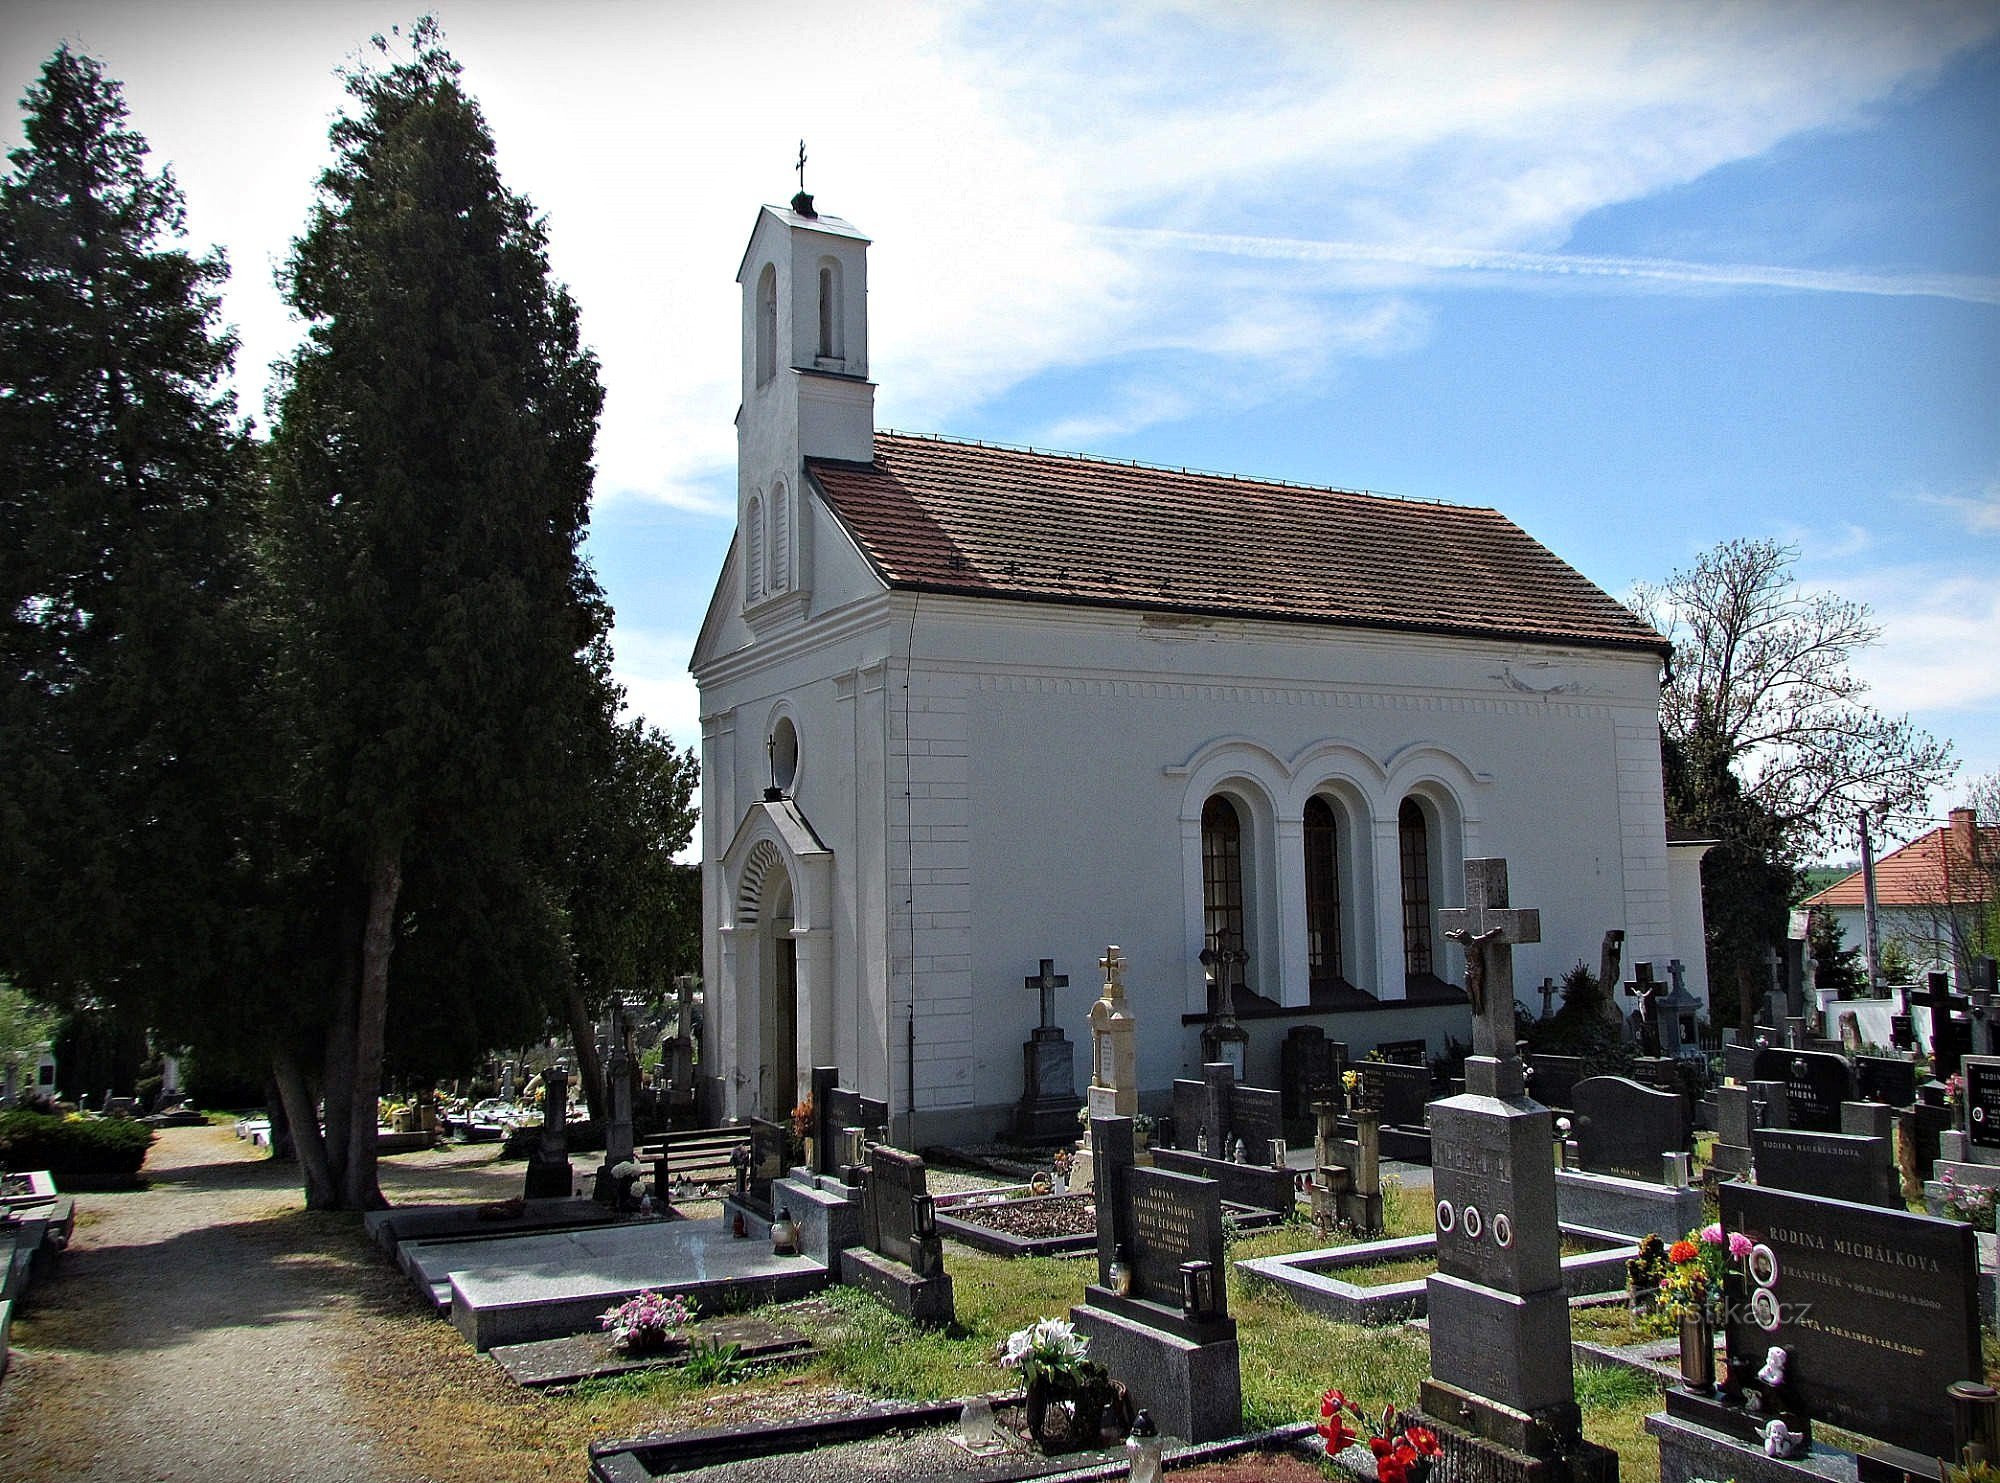 Uherský Brod - Antiguo cementerio y capilla